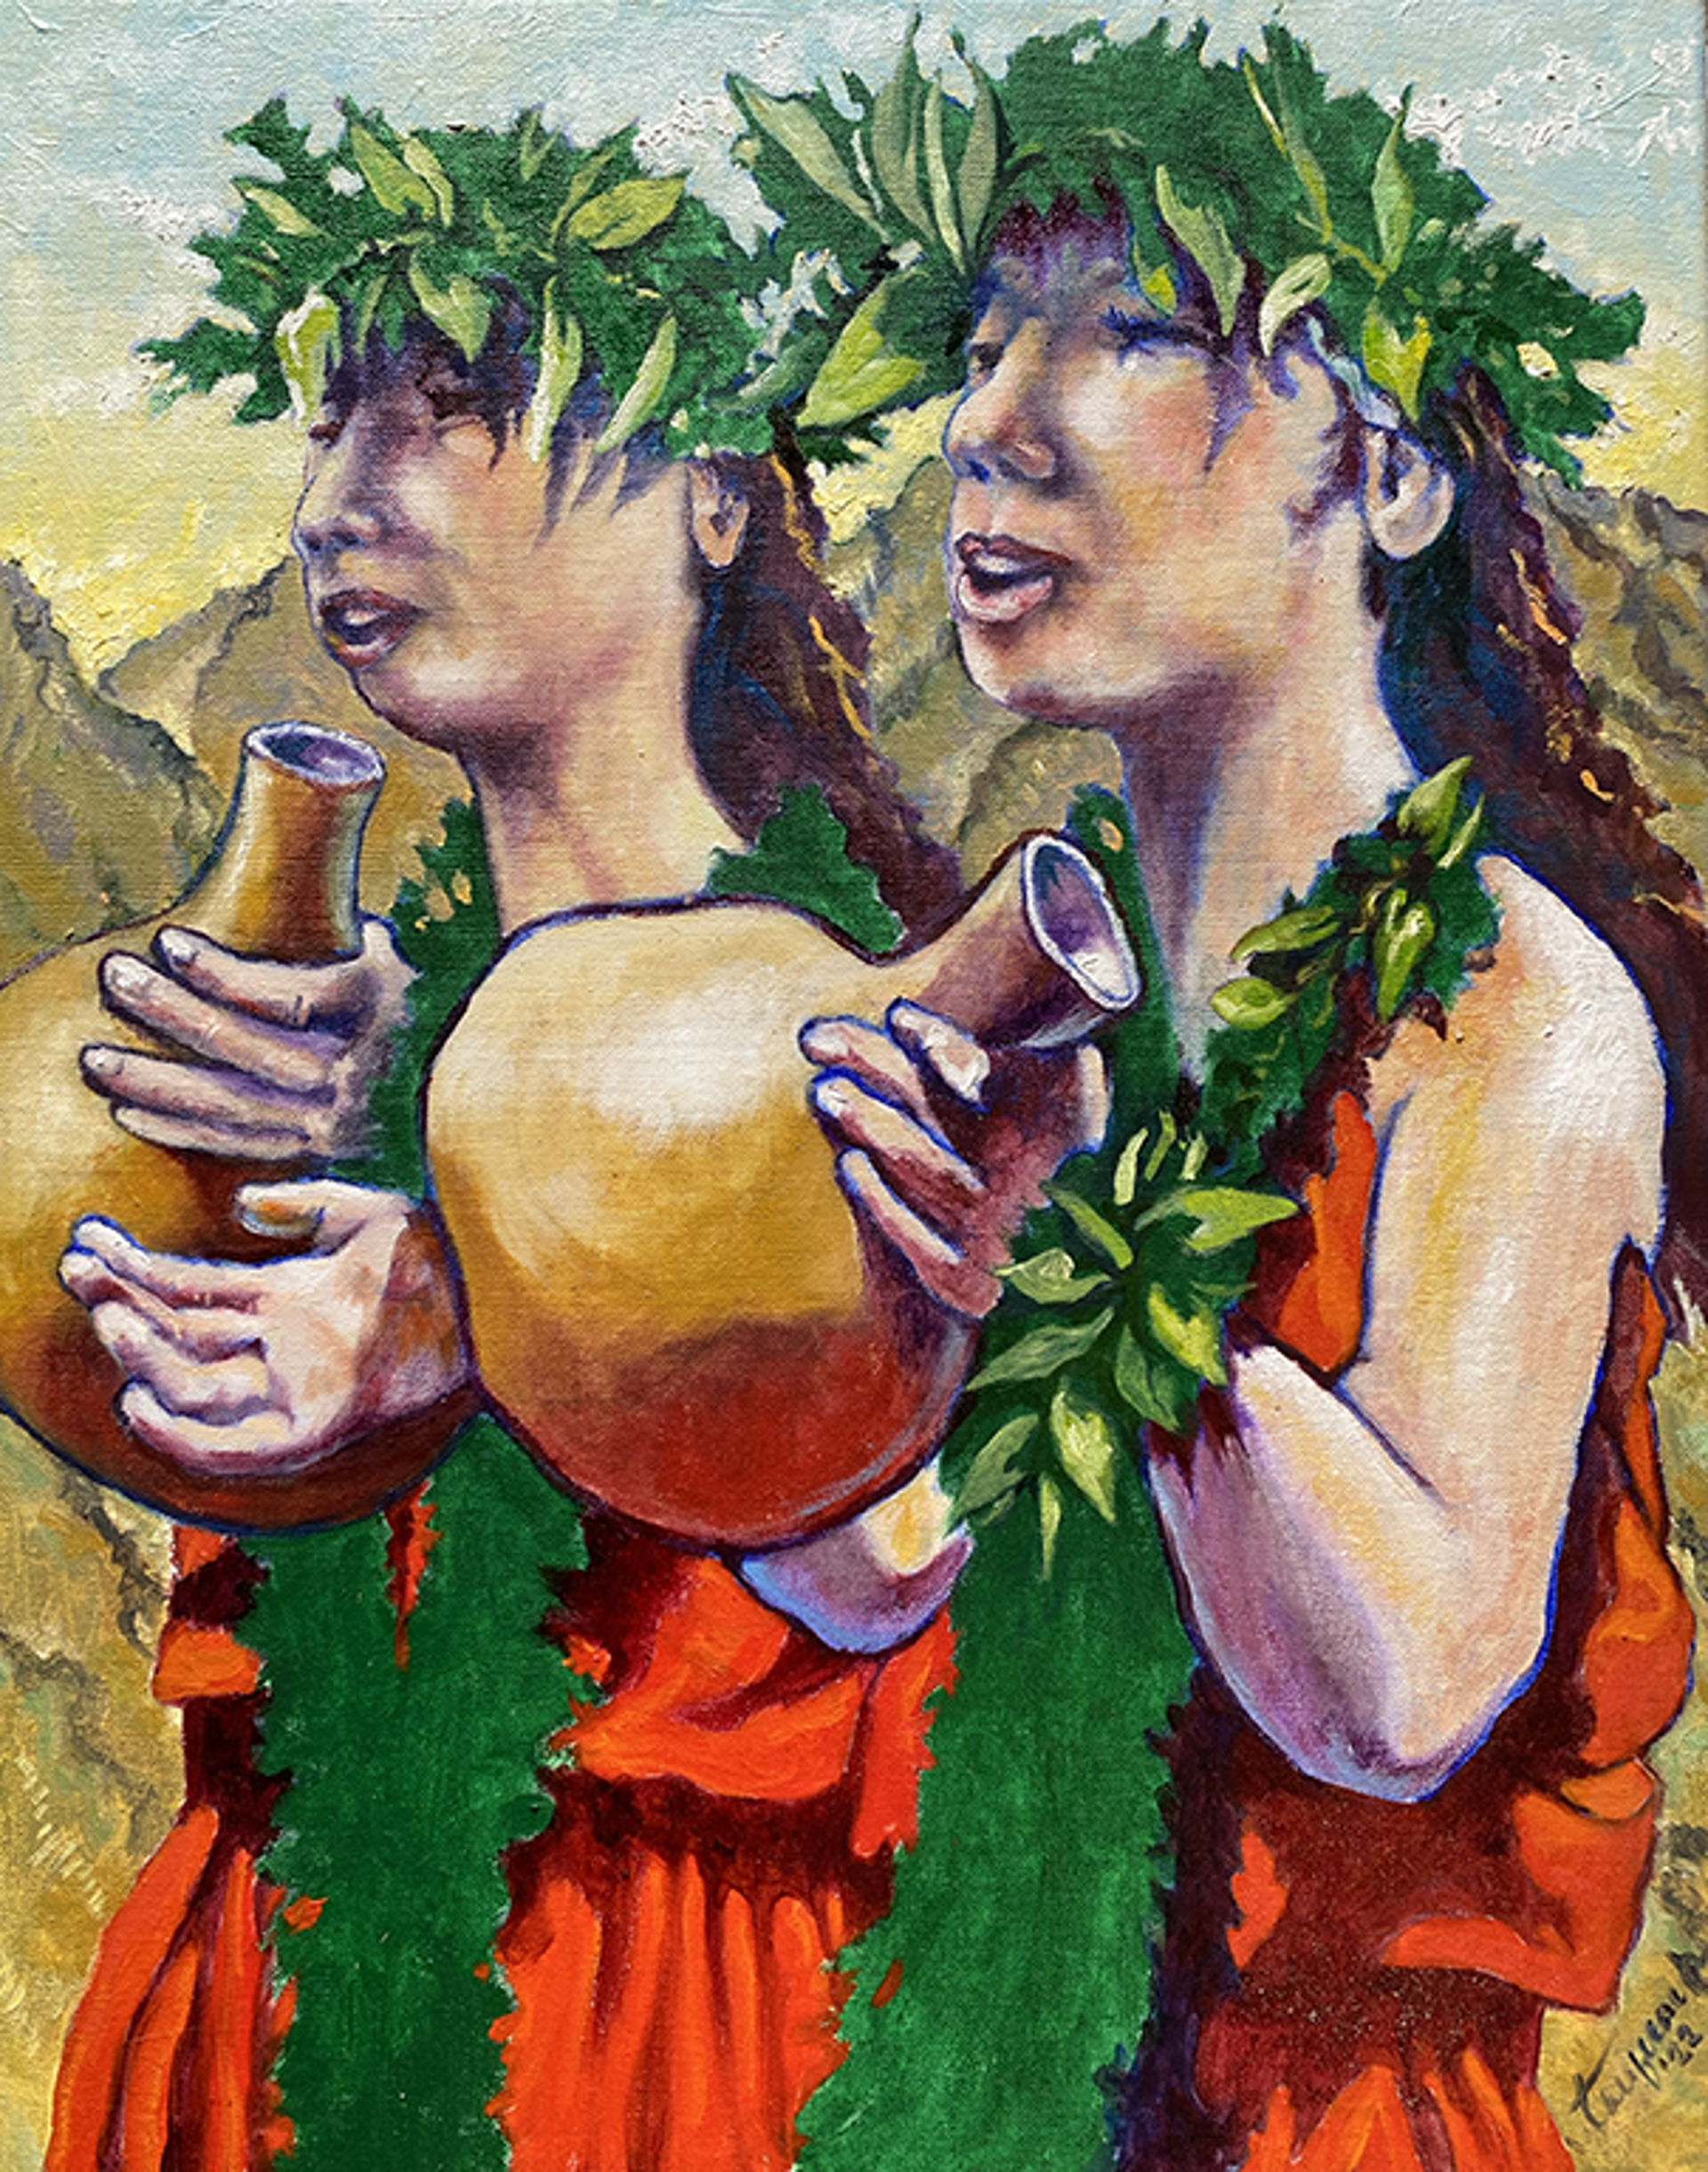 Manoa Sisters by Hank Taufaasau